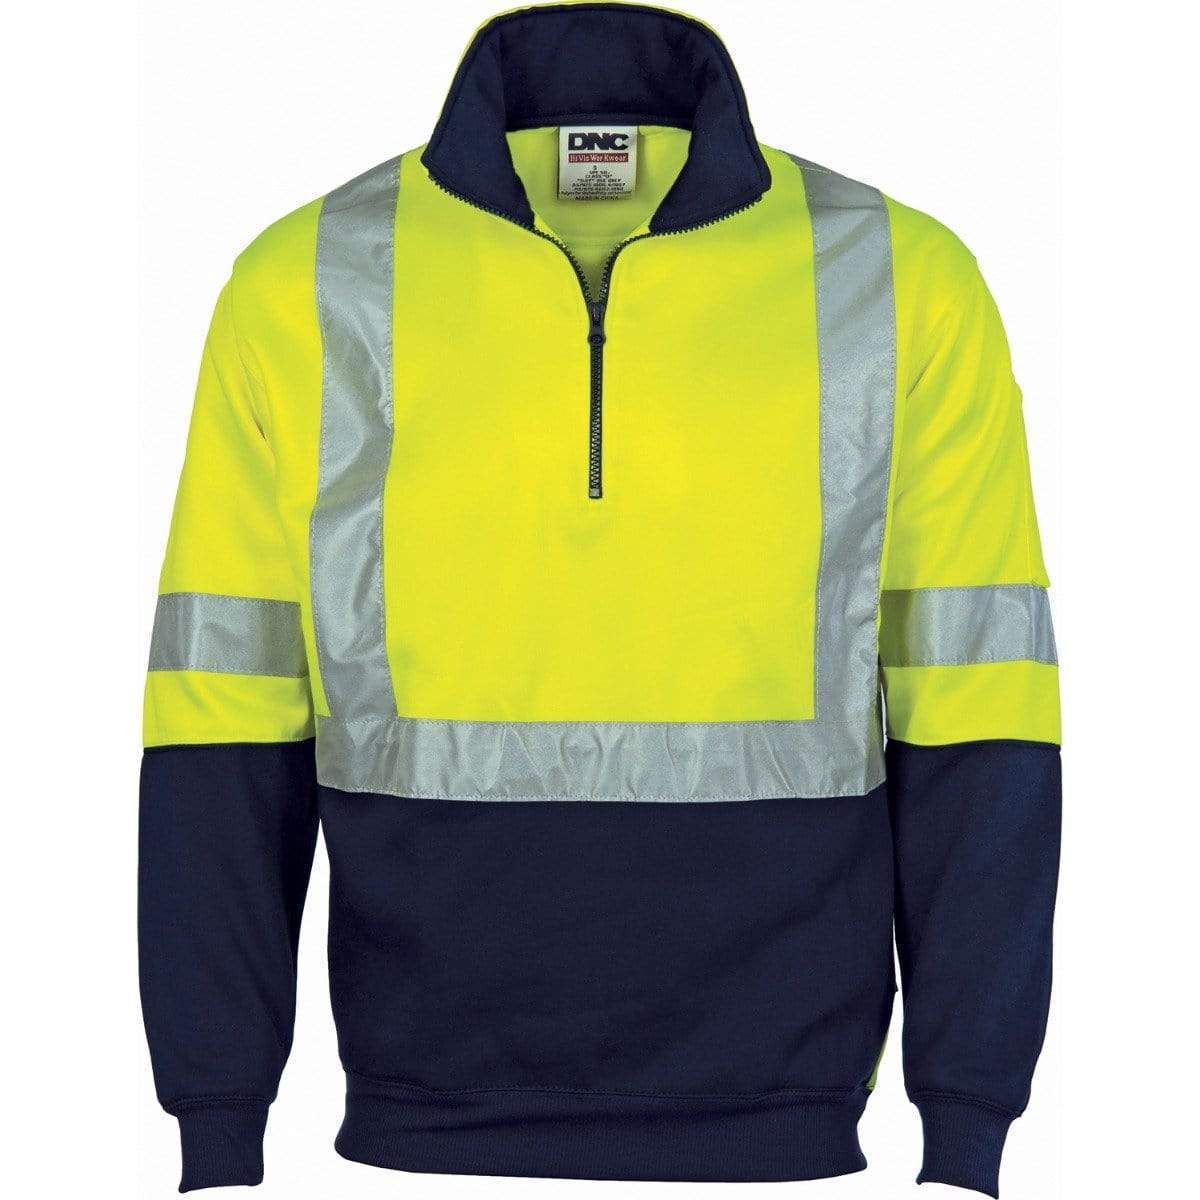 Dnc Workwear Hi-vis Cross Back D/n Two Tone 1/2 Zip Fleecy Sweatshirt - 3929 Work Wear DNC Workwear Yellow/Navy S 